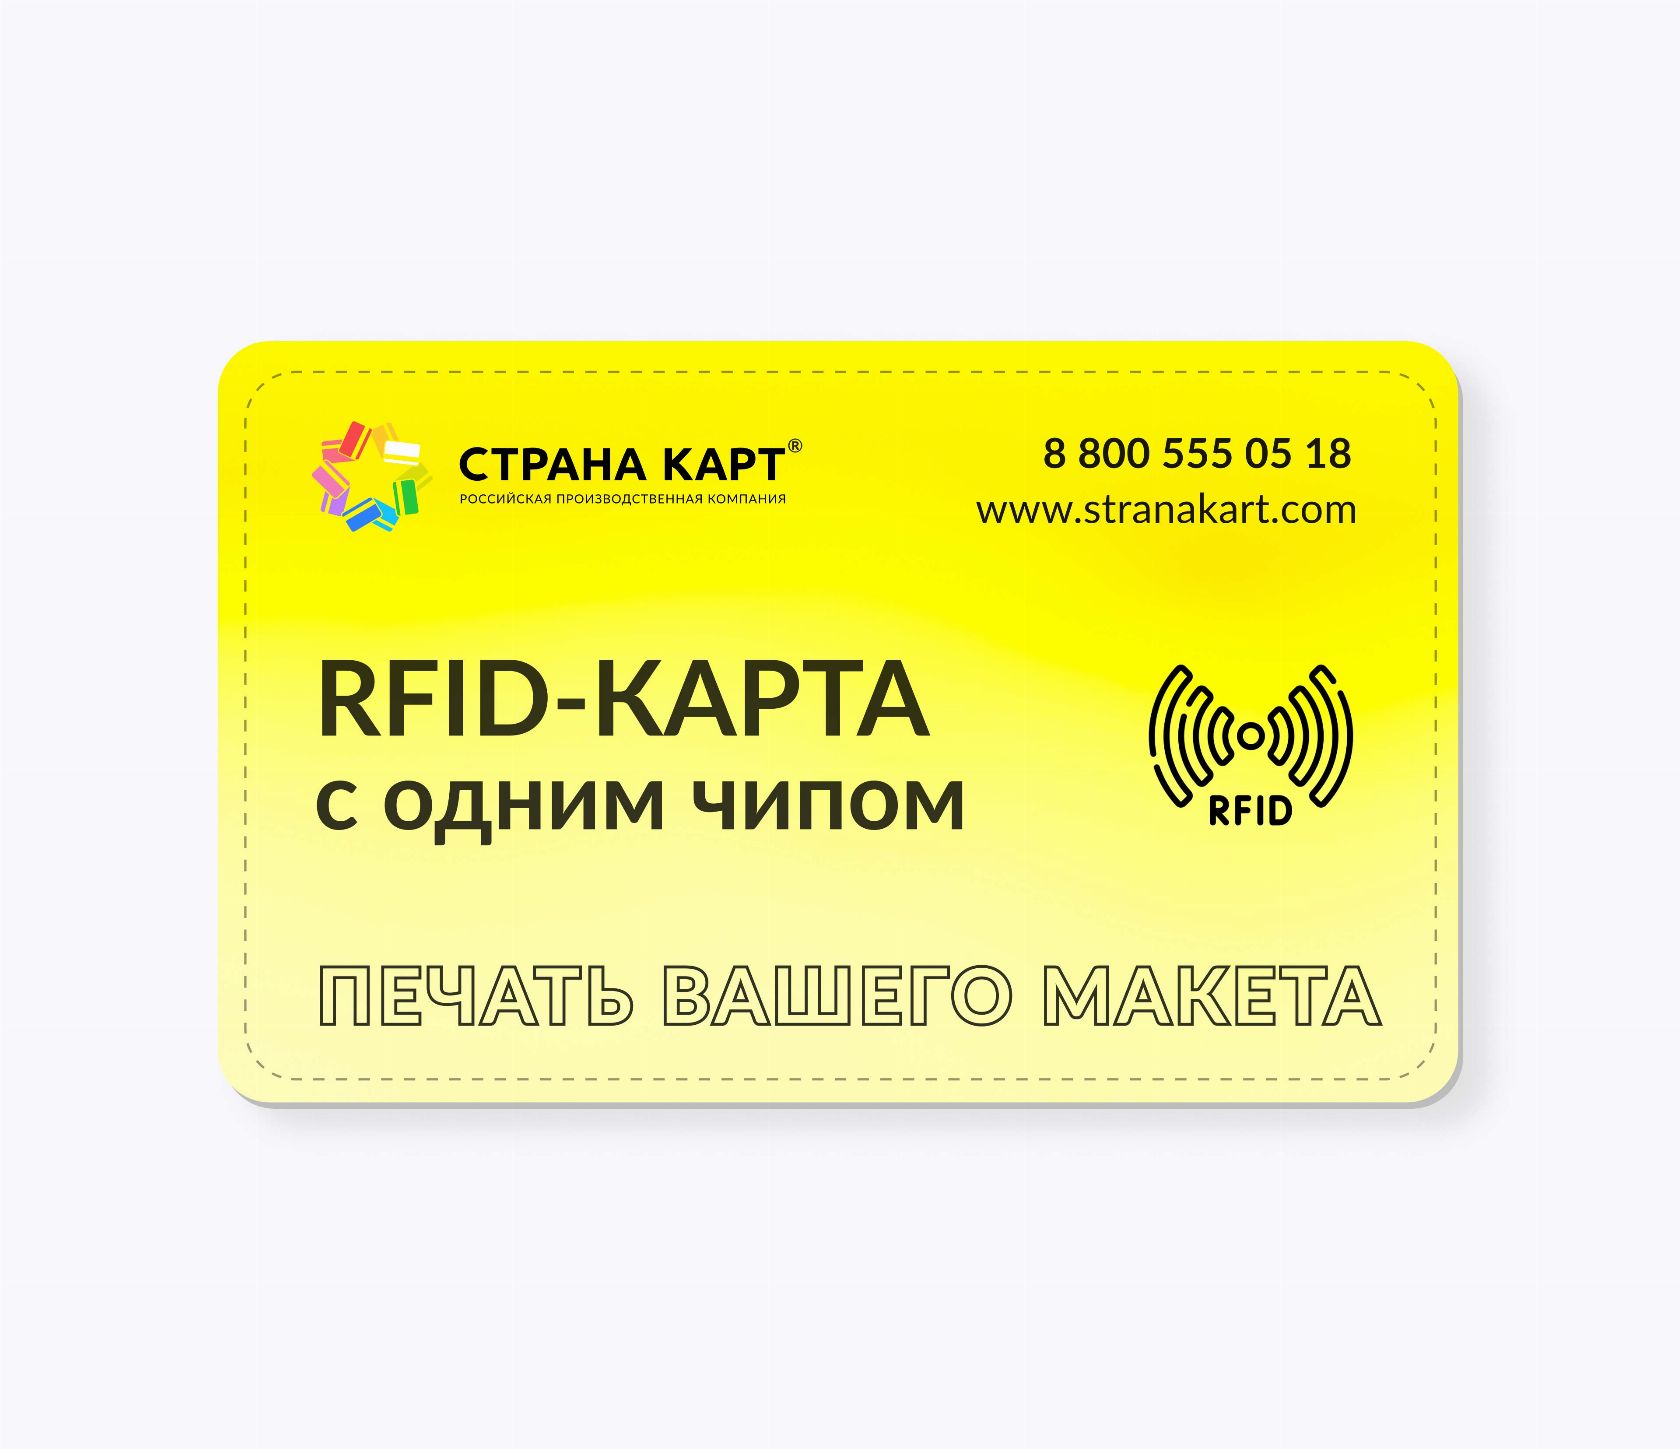 RFID-карты с чипом NXP MIFARE Plus S 4k 7 byte UID печать вашего макета RFID-карты с чипом NXP MIFARE Plus S 4k 7 byte UID